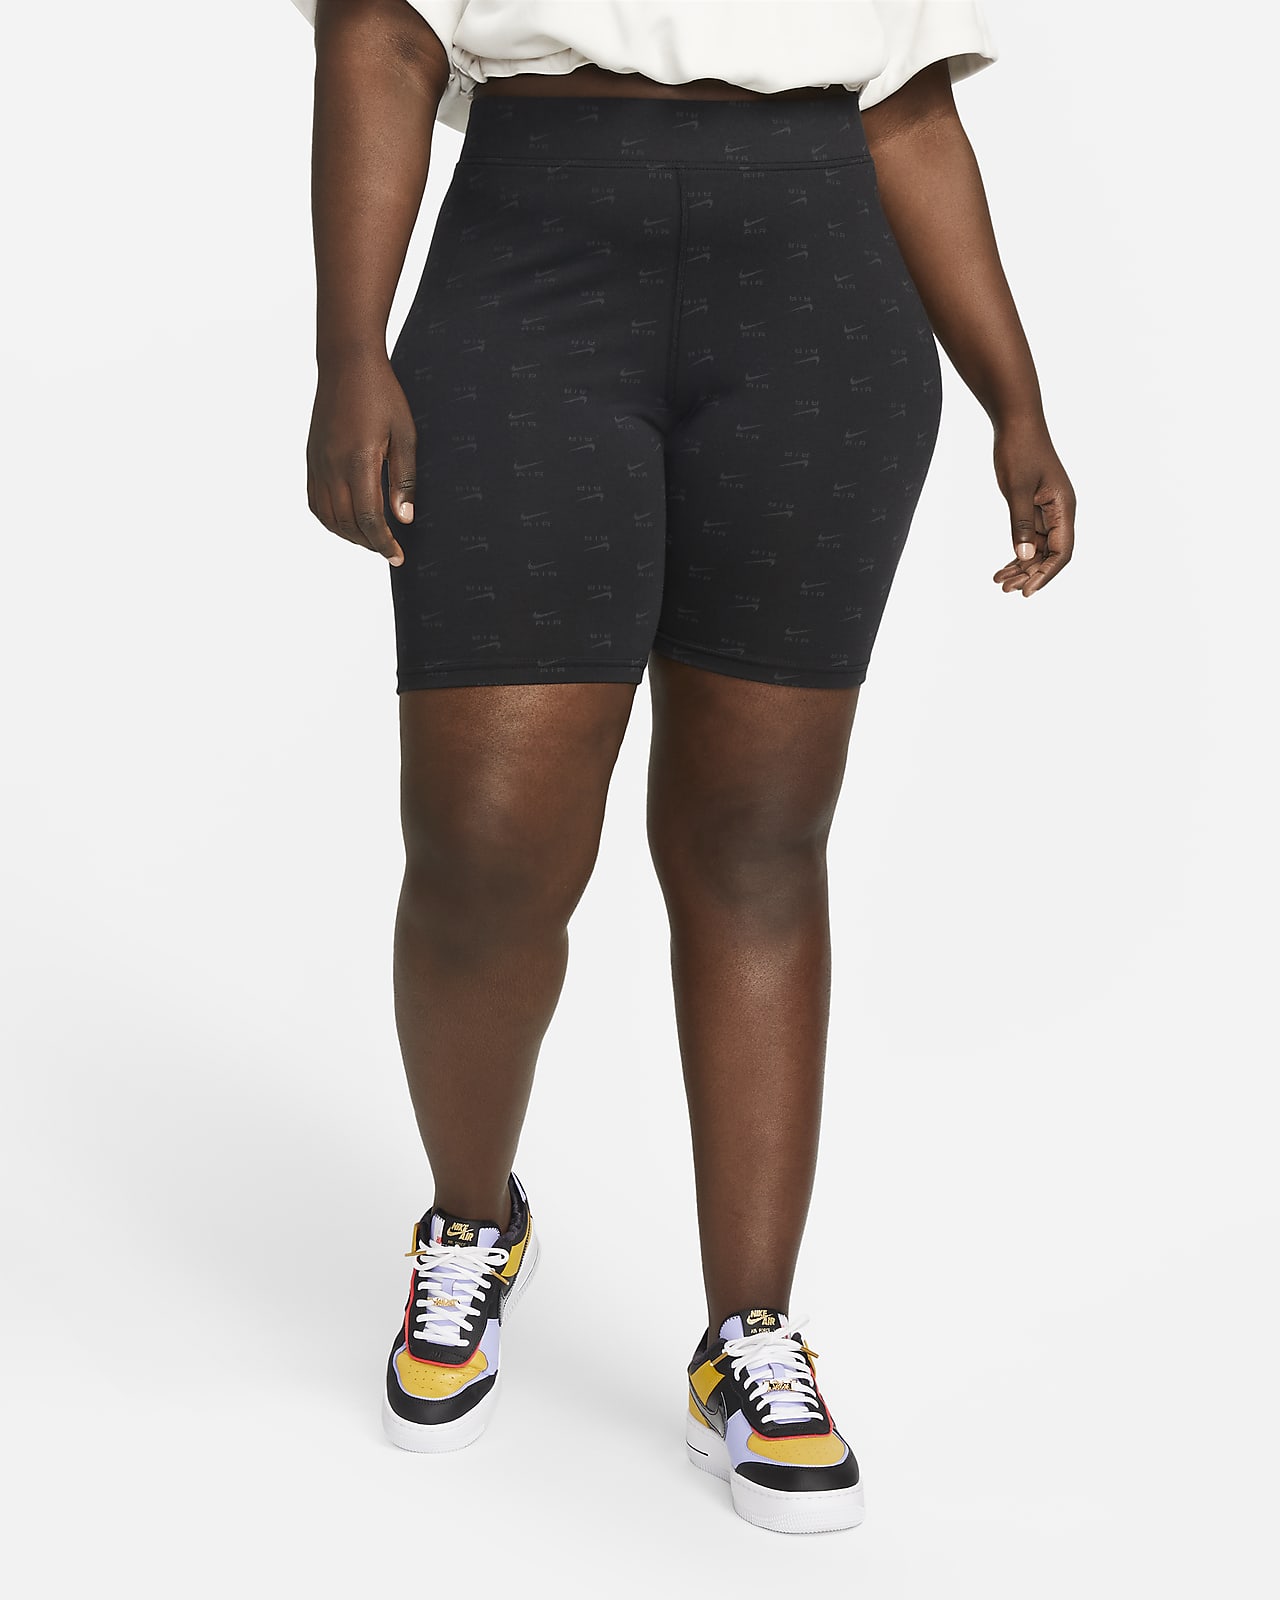 Nike Air Pantalones cortos de ciclismo de talle alto (Talla grande) - Mujer